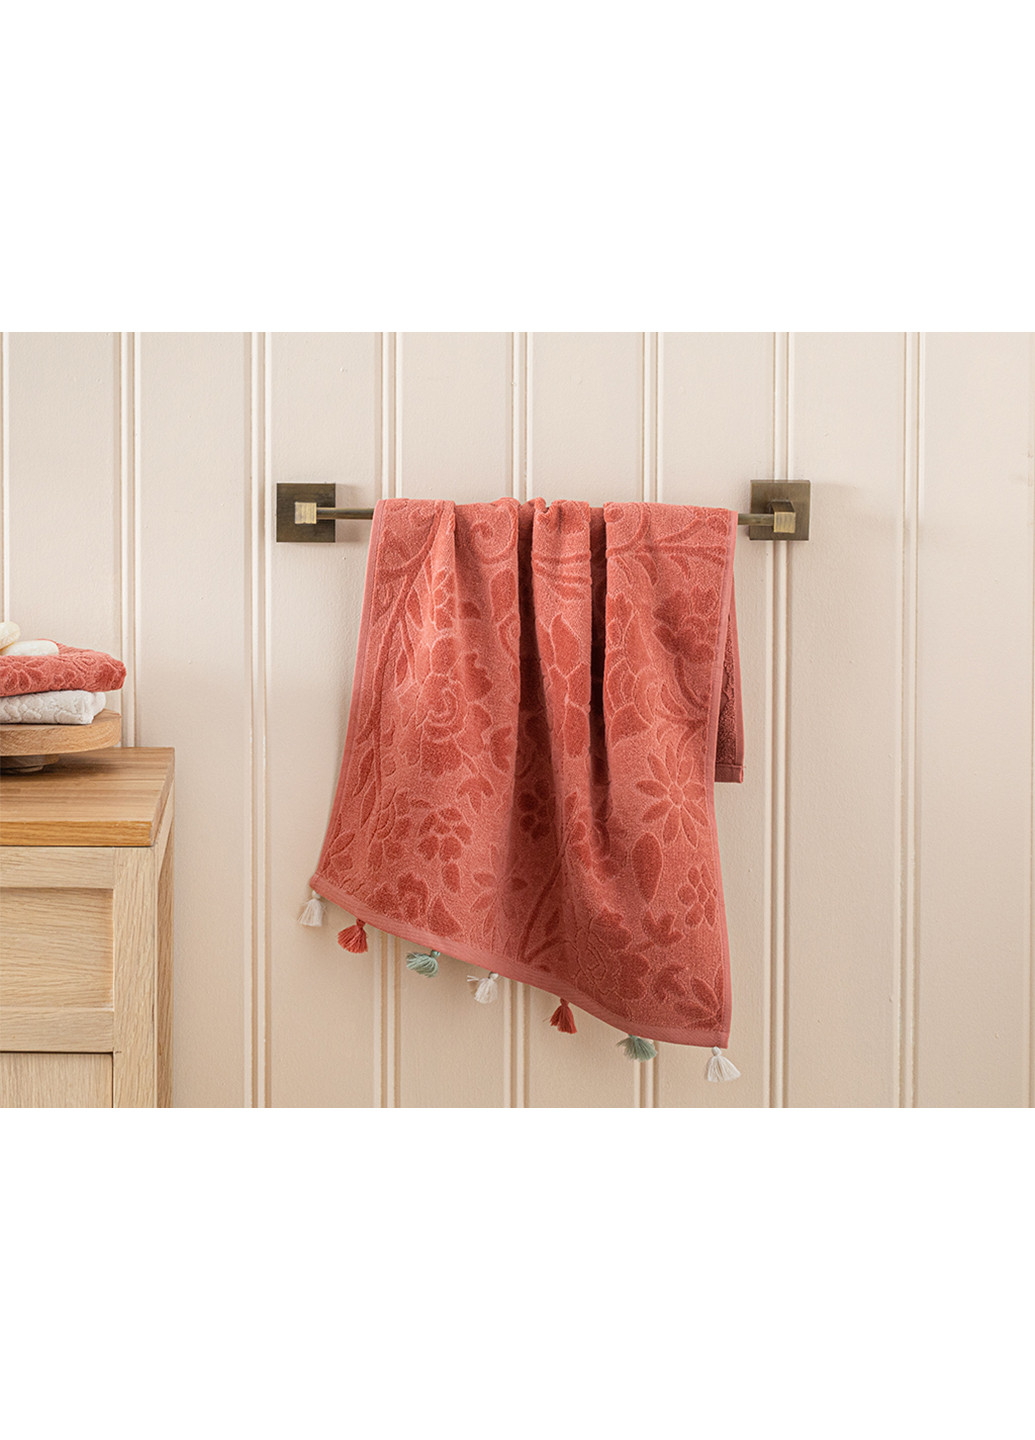 English Home полотенце, 50х70 см цветочный розовый производство - Турция